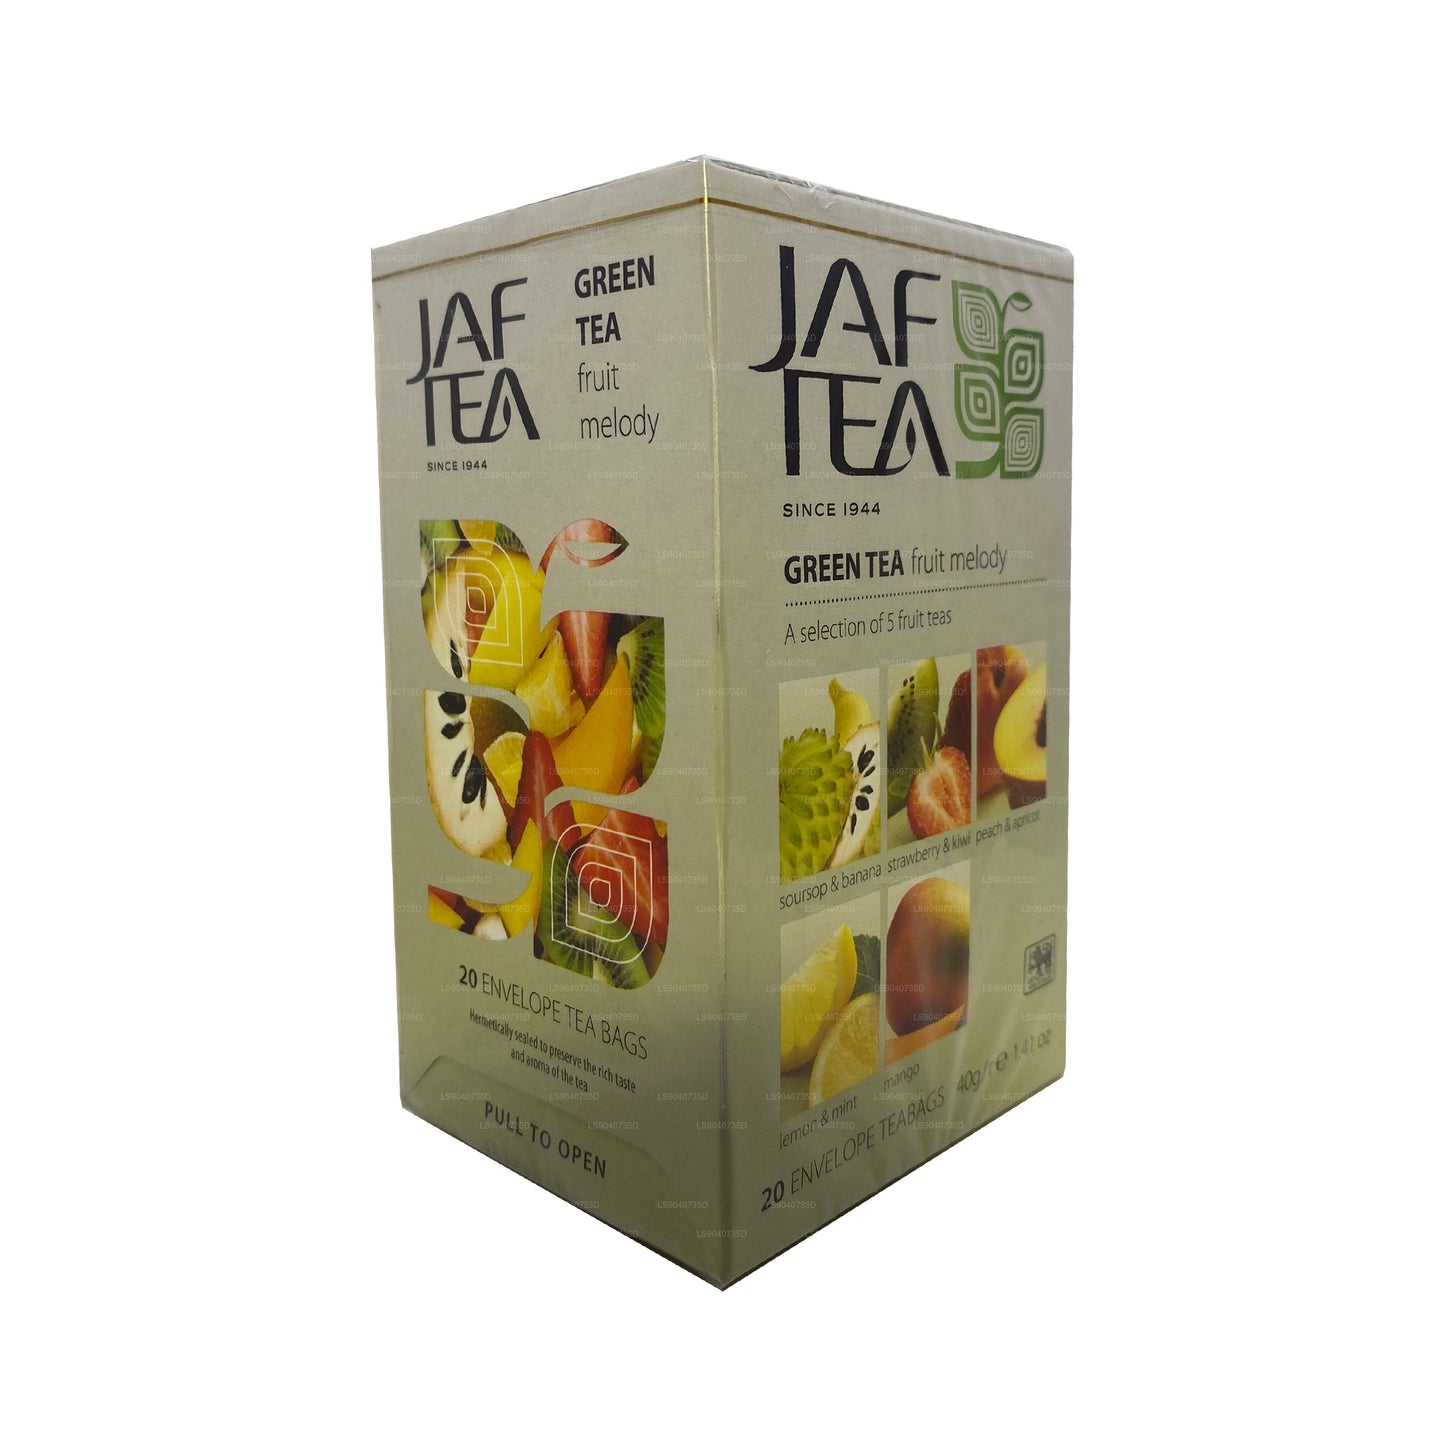 Jaf Tea Fruit Melody Green Tea (40g) Foil Envelop Tea Bags